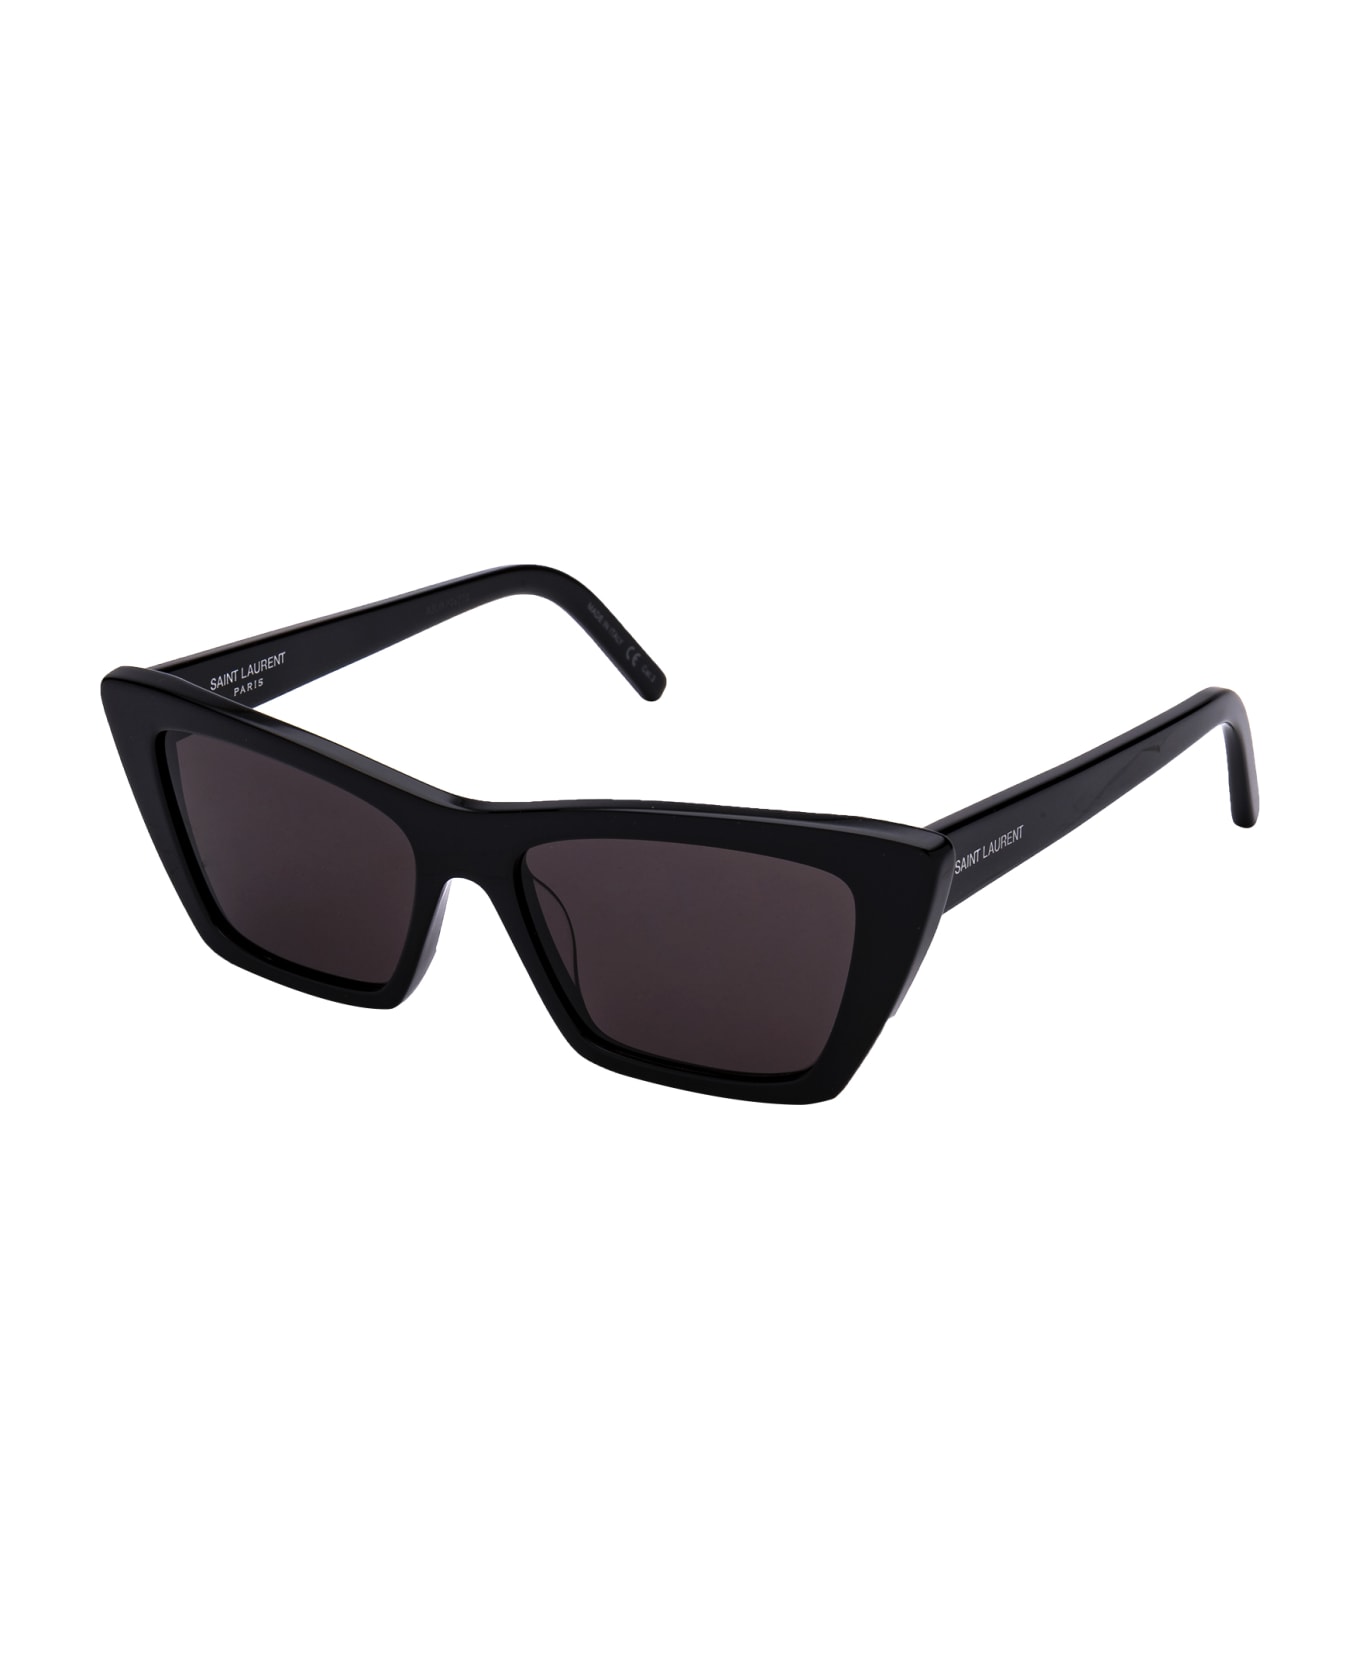 Saint Laurent Eyewear Sl 276 Mica Sunglasses McQueen - 001 BLACK BLACK GREY